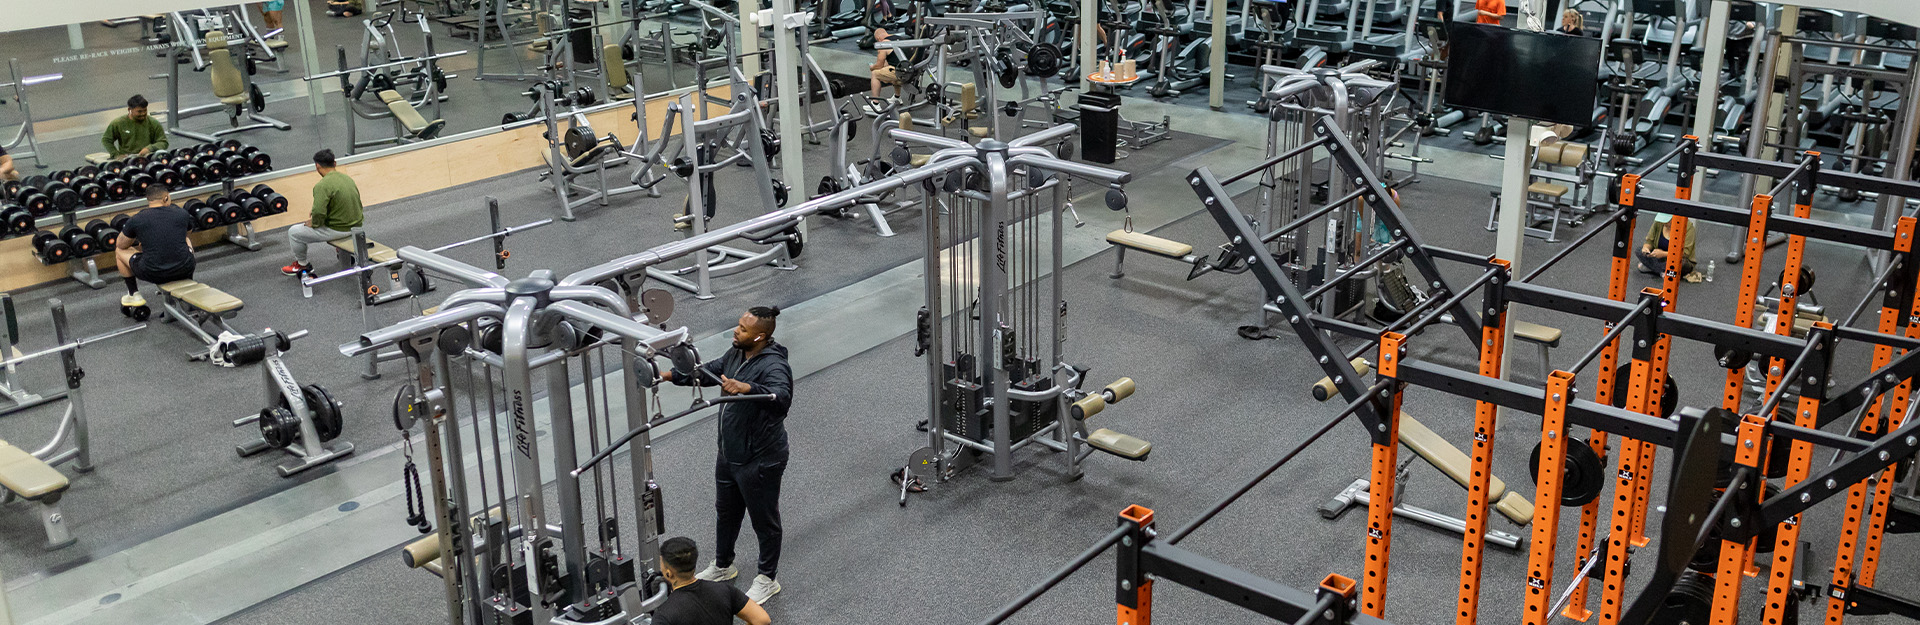 strength training area in modern gym